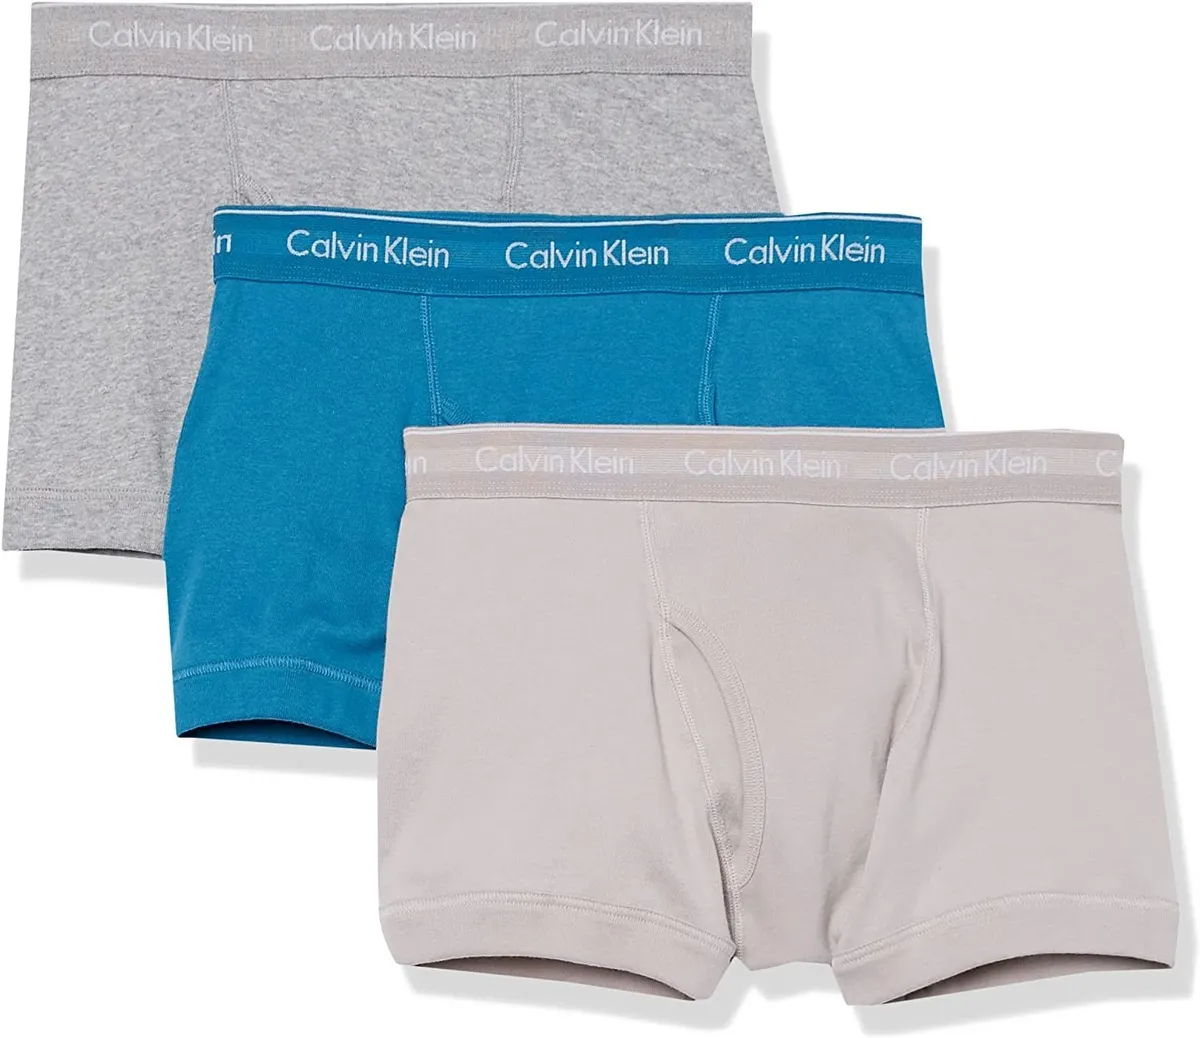 Calvin Klein Men's Underwear Cotton Classics 3-Pack Trunk